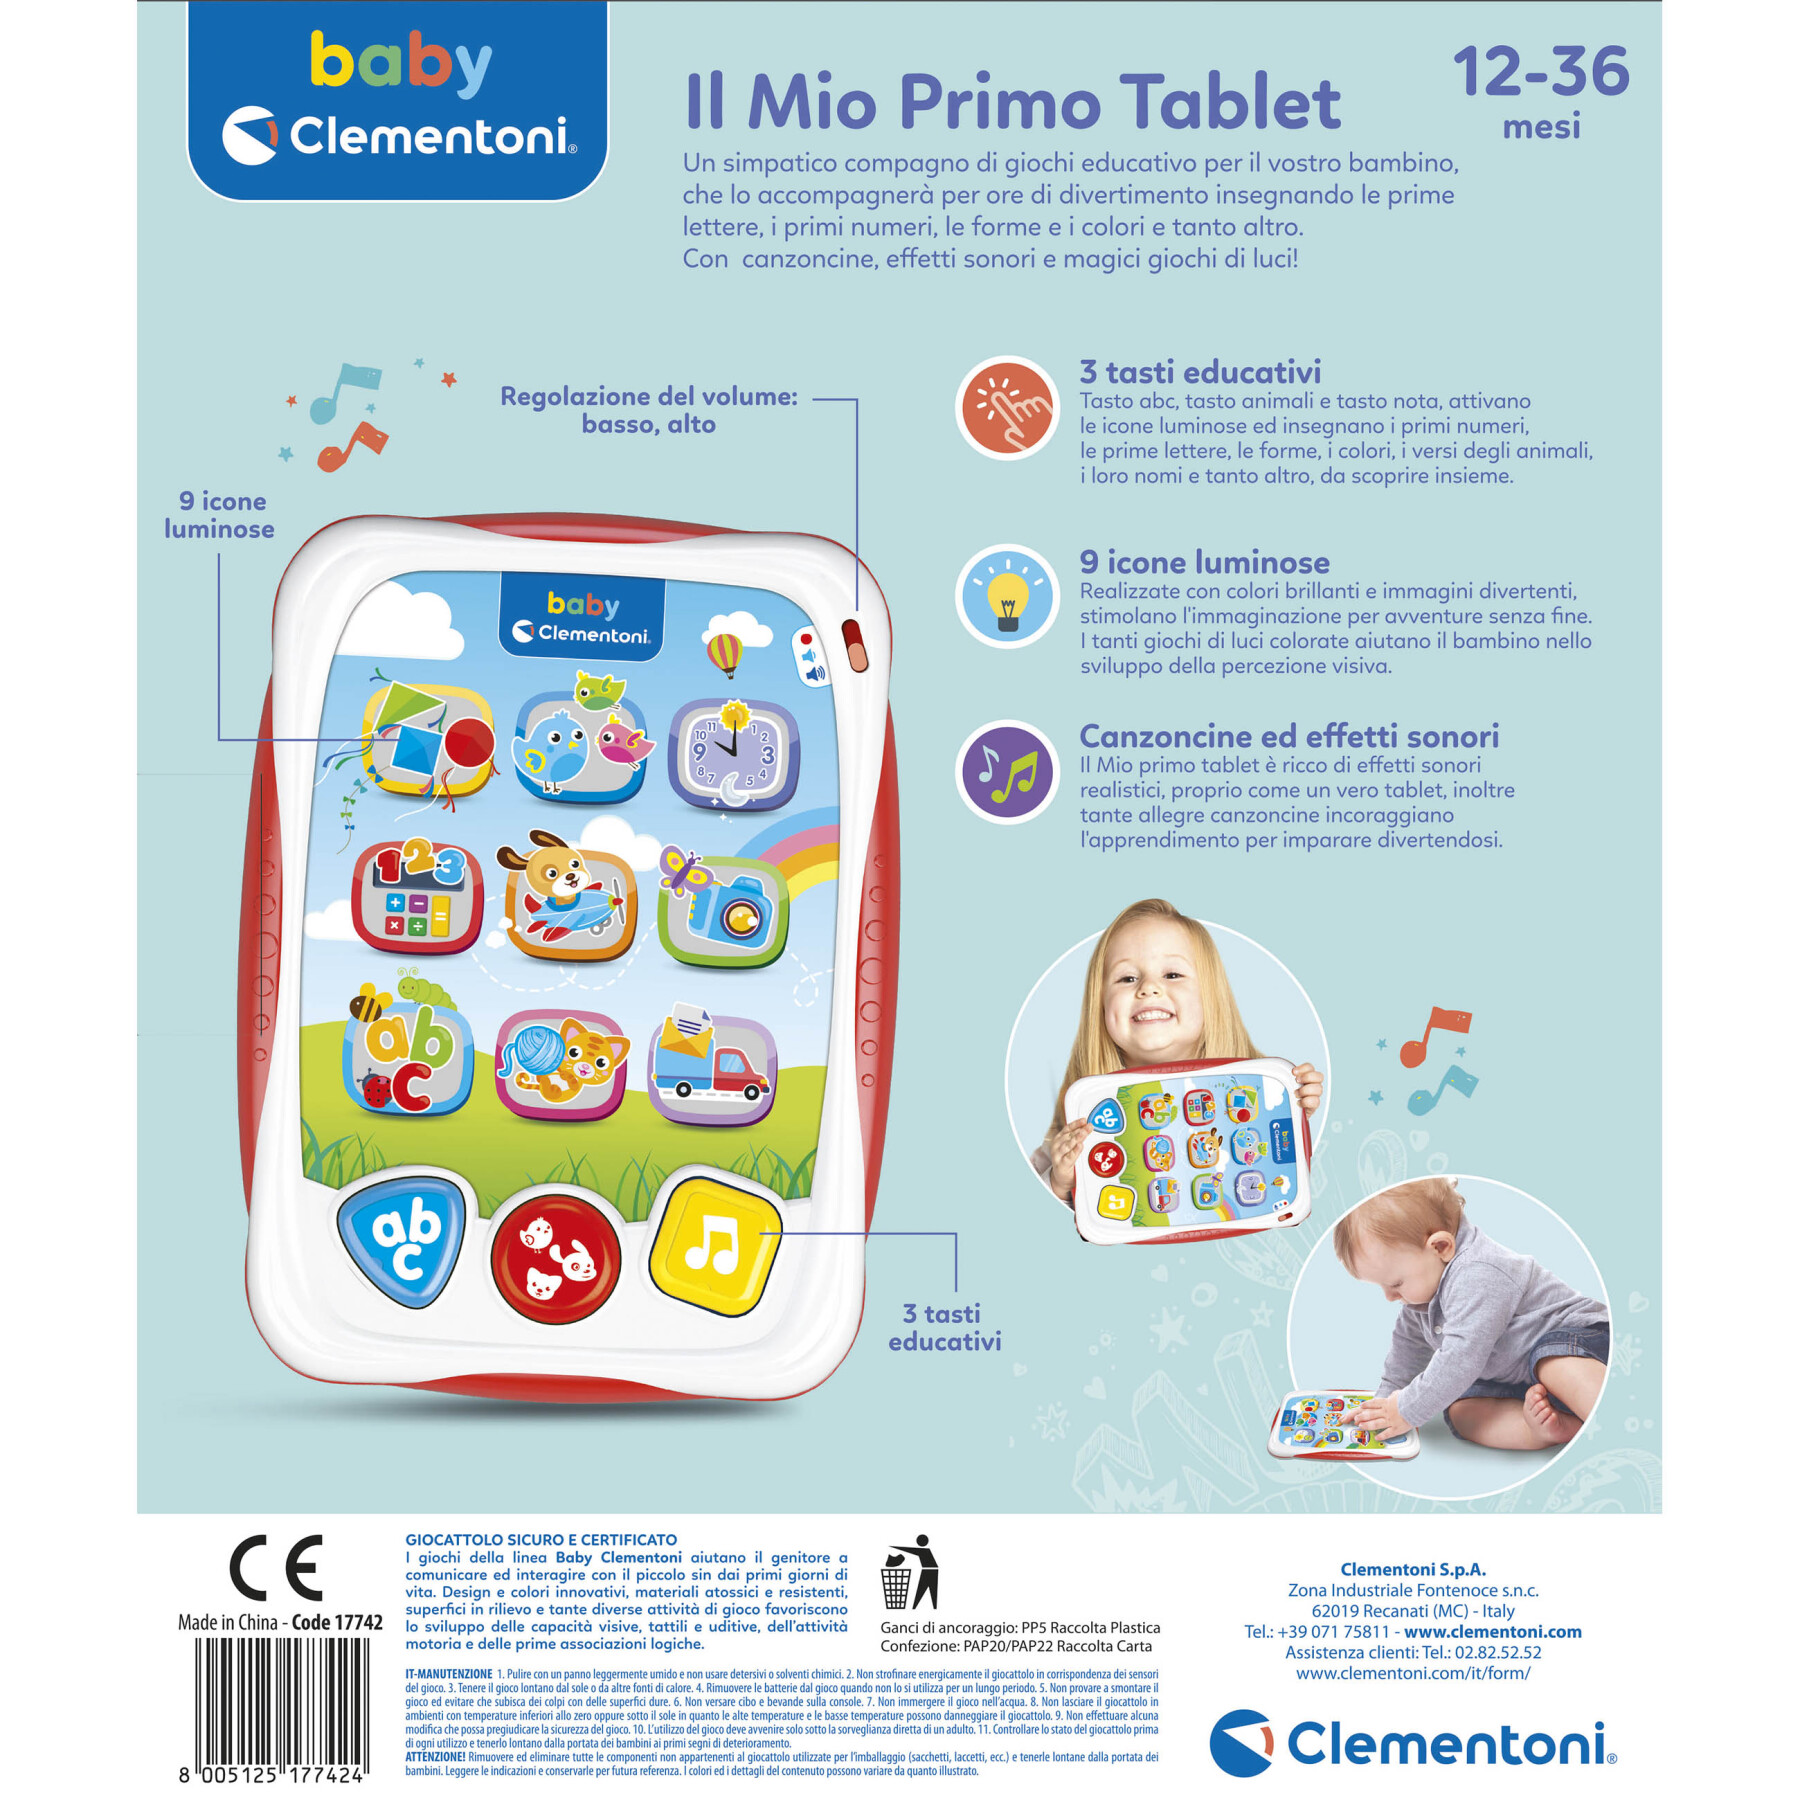 Baby clementoni - il mio primo tablet, educativo parlante - BABY CLEMENTONI